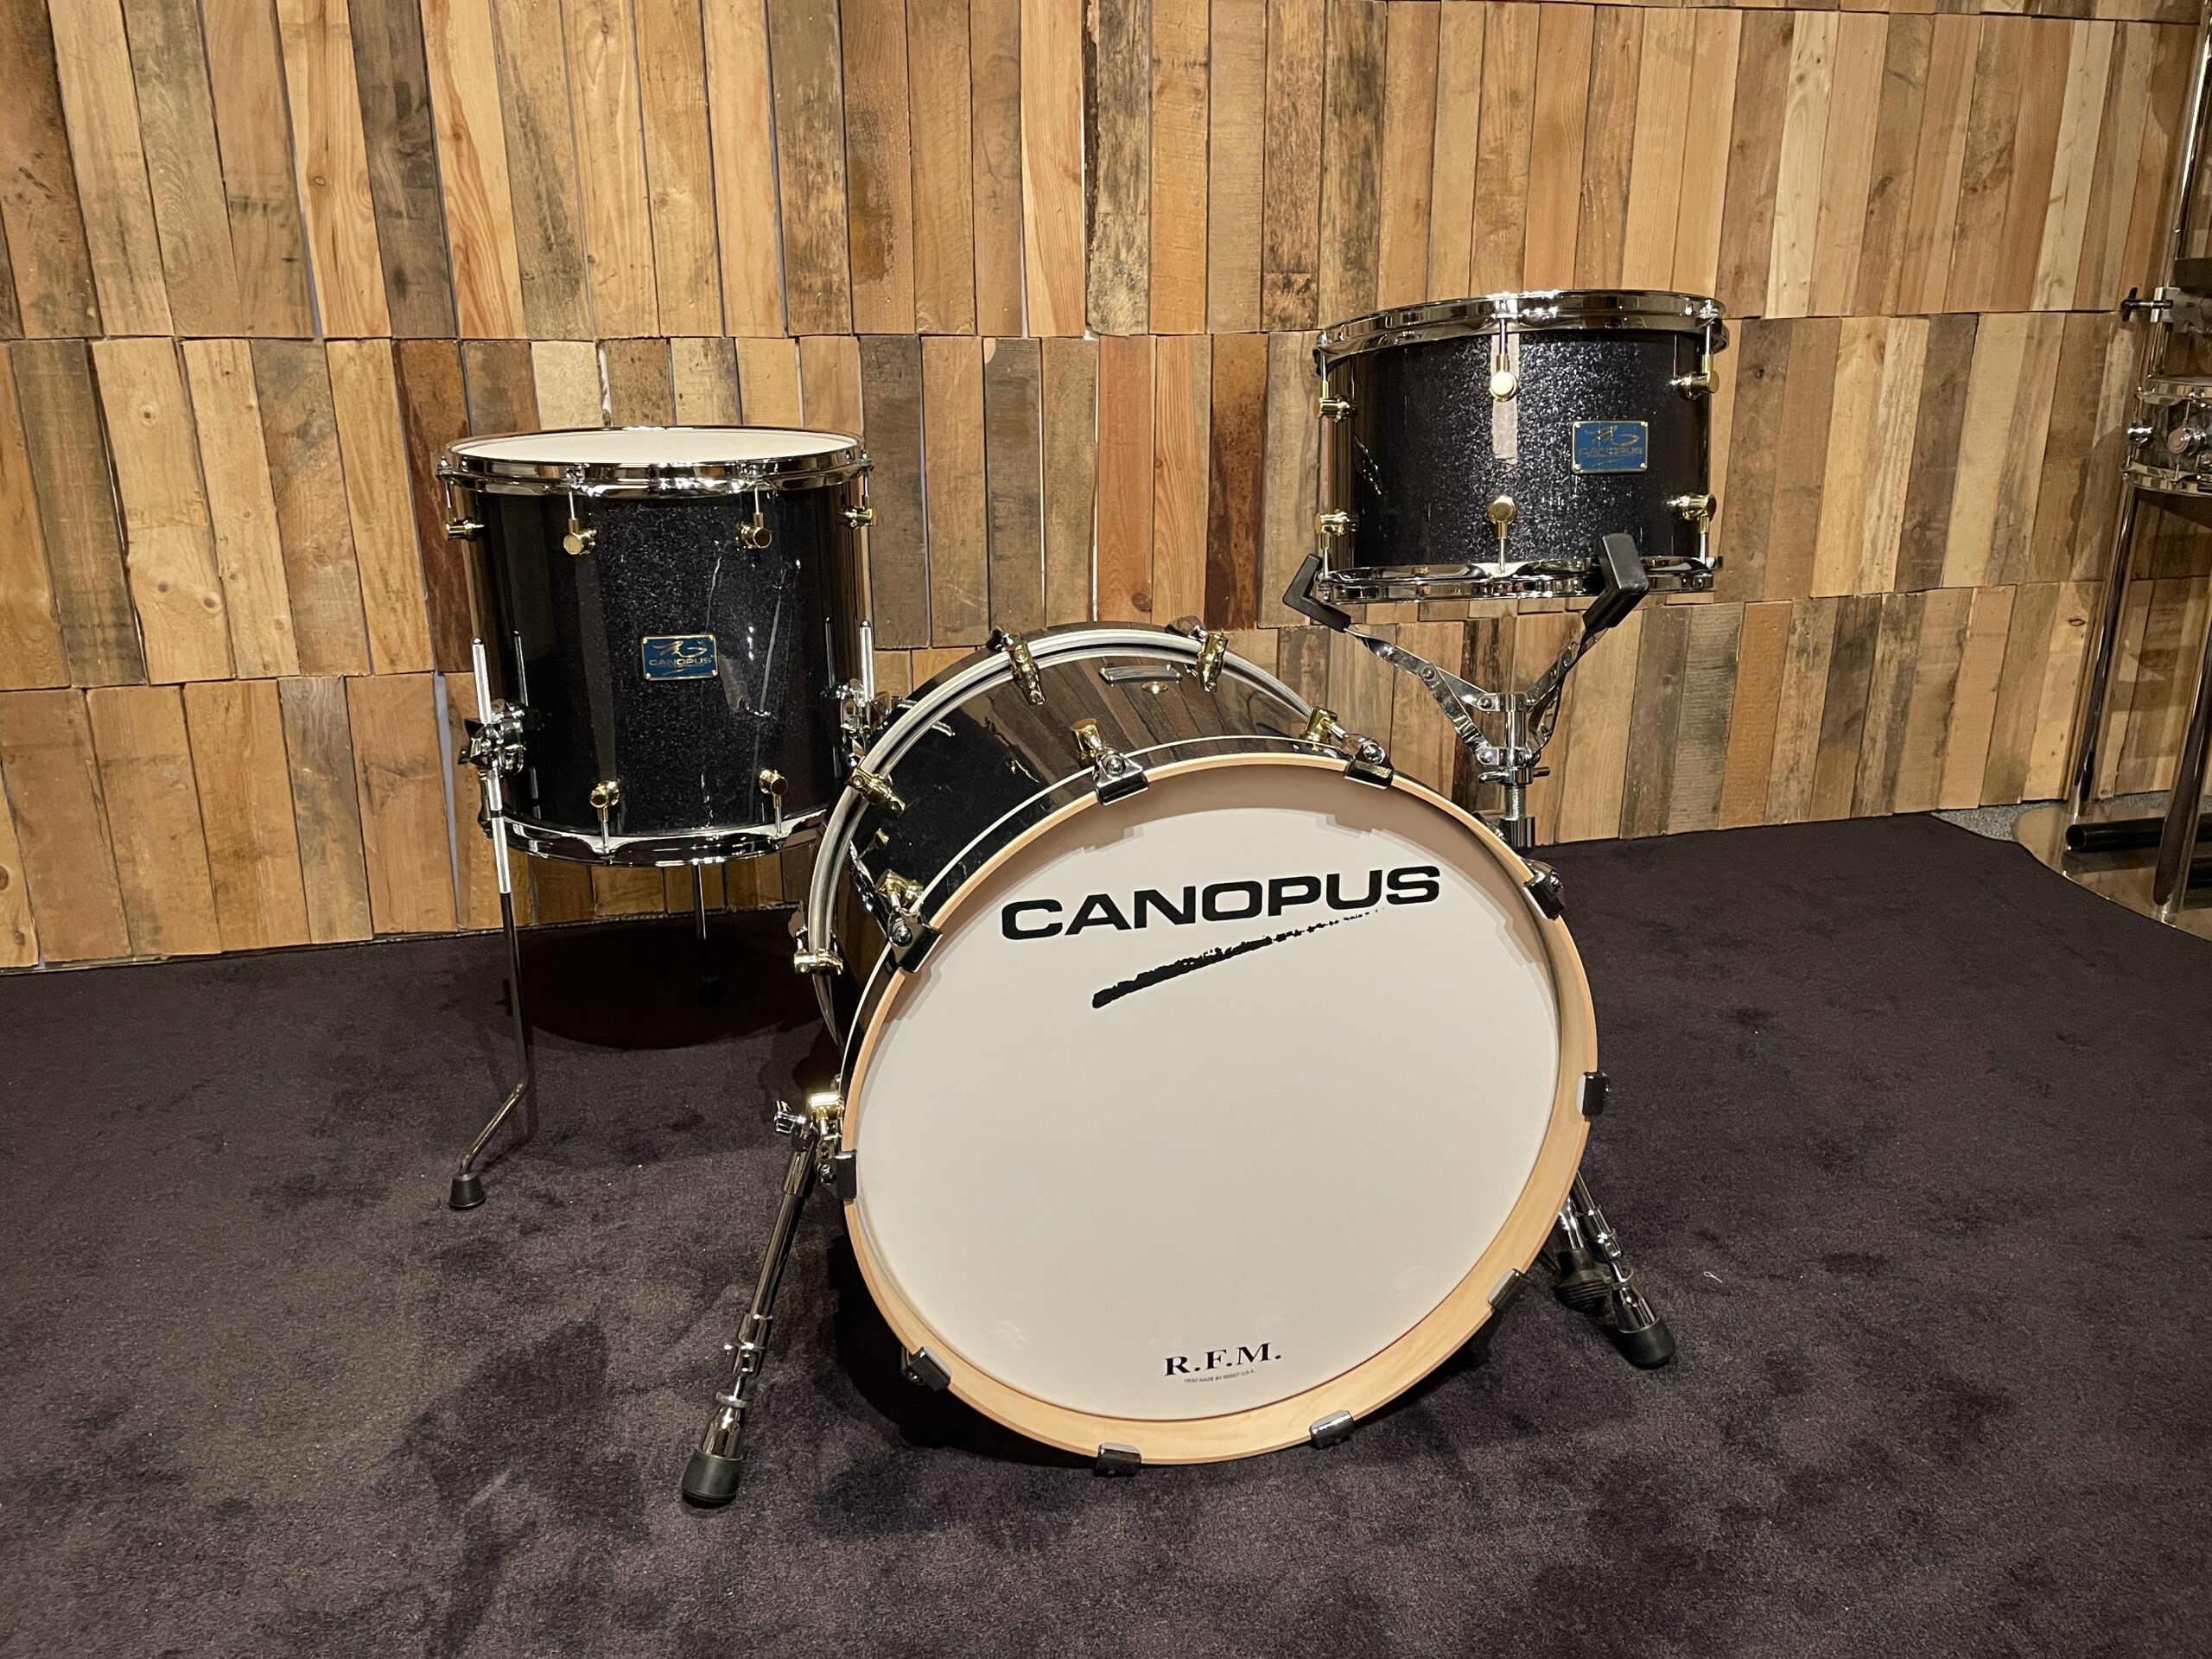 Canopus RFM Studio Shellset (brass lugs) Black Sparkle - Drums Only